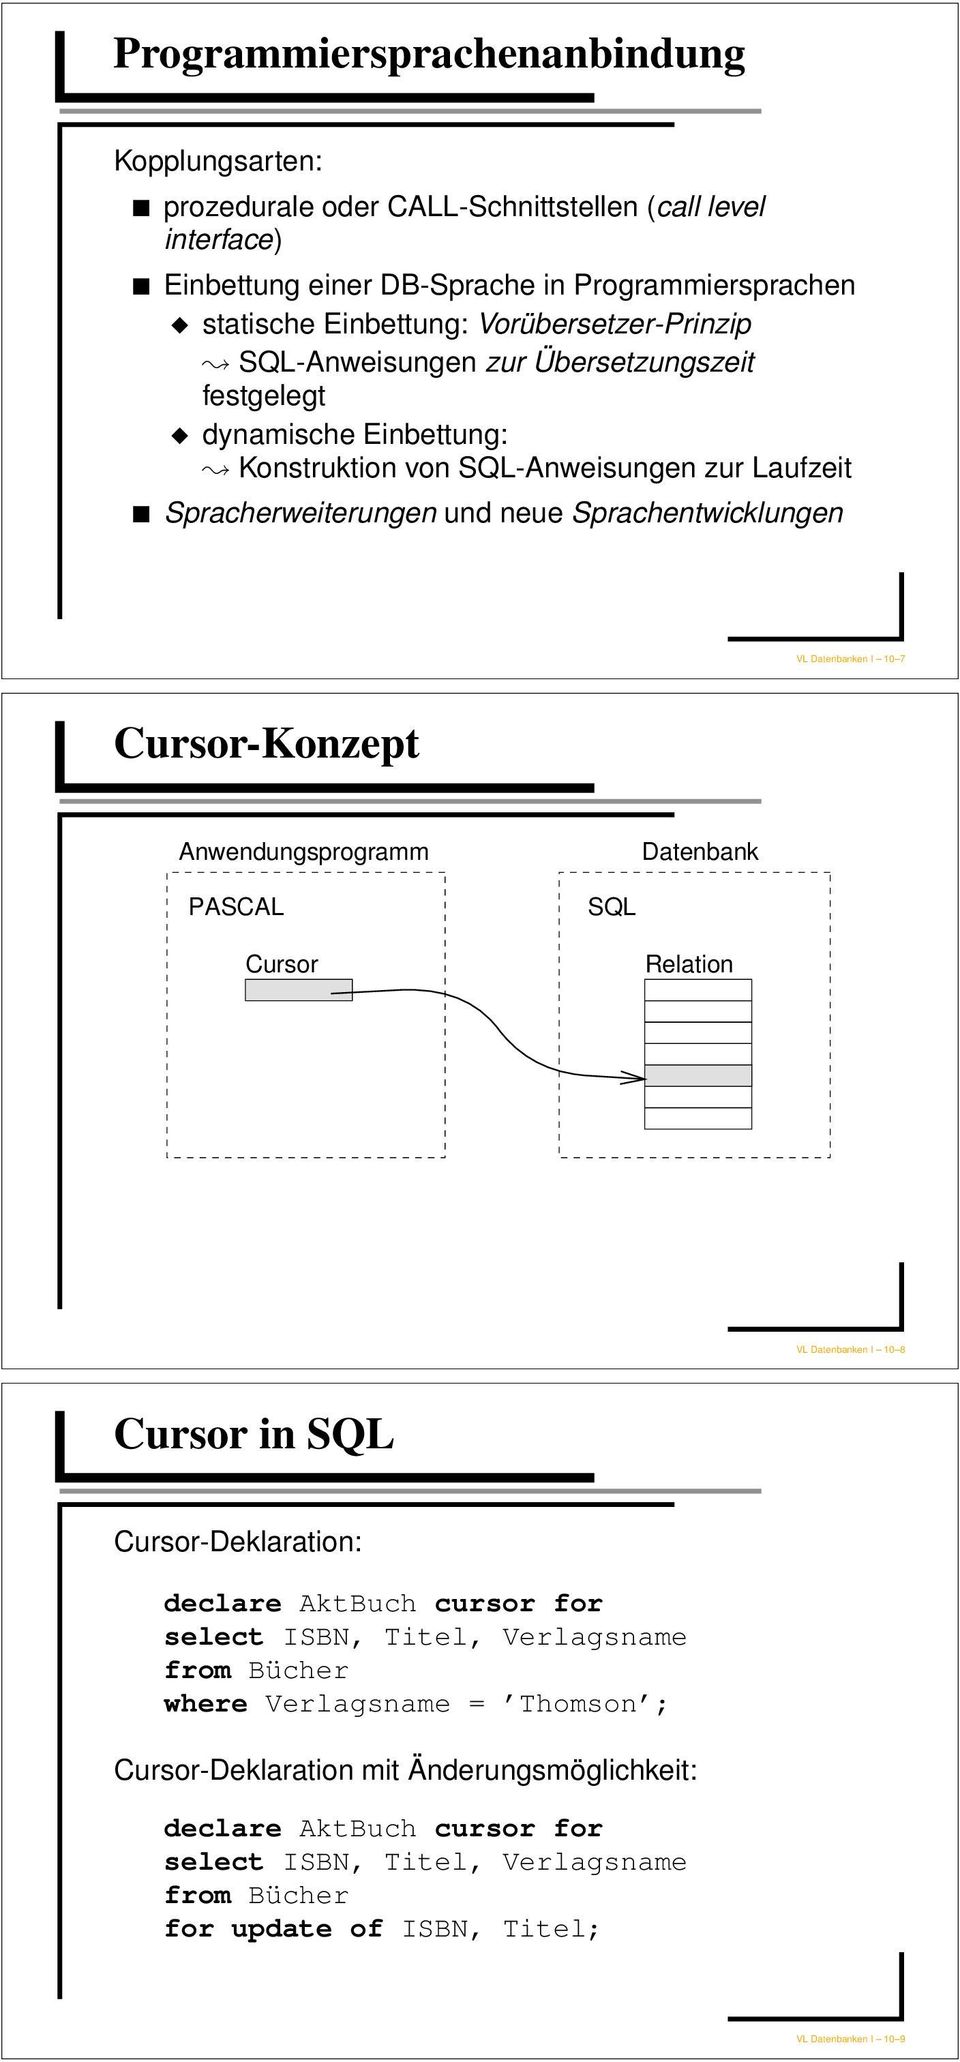 Datenbanken I 10 7 Cursor-Konzept Anwendungsprogramm Datenbank PASCAL SQL Cursor Relation VL Datenbanken I 10 8 Cursor in SQL Cursor-Deklaration: declare AktBuch cursor for select ISBN, Titel,